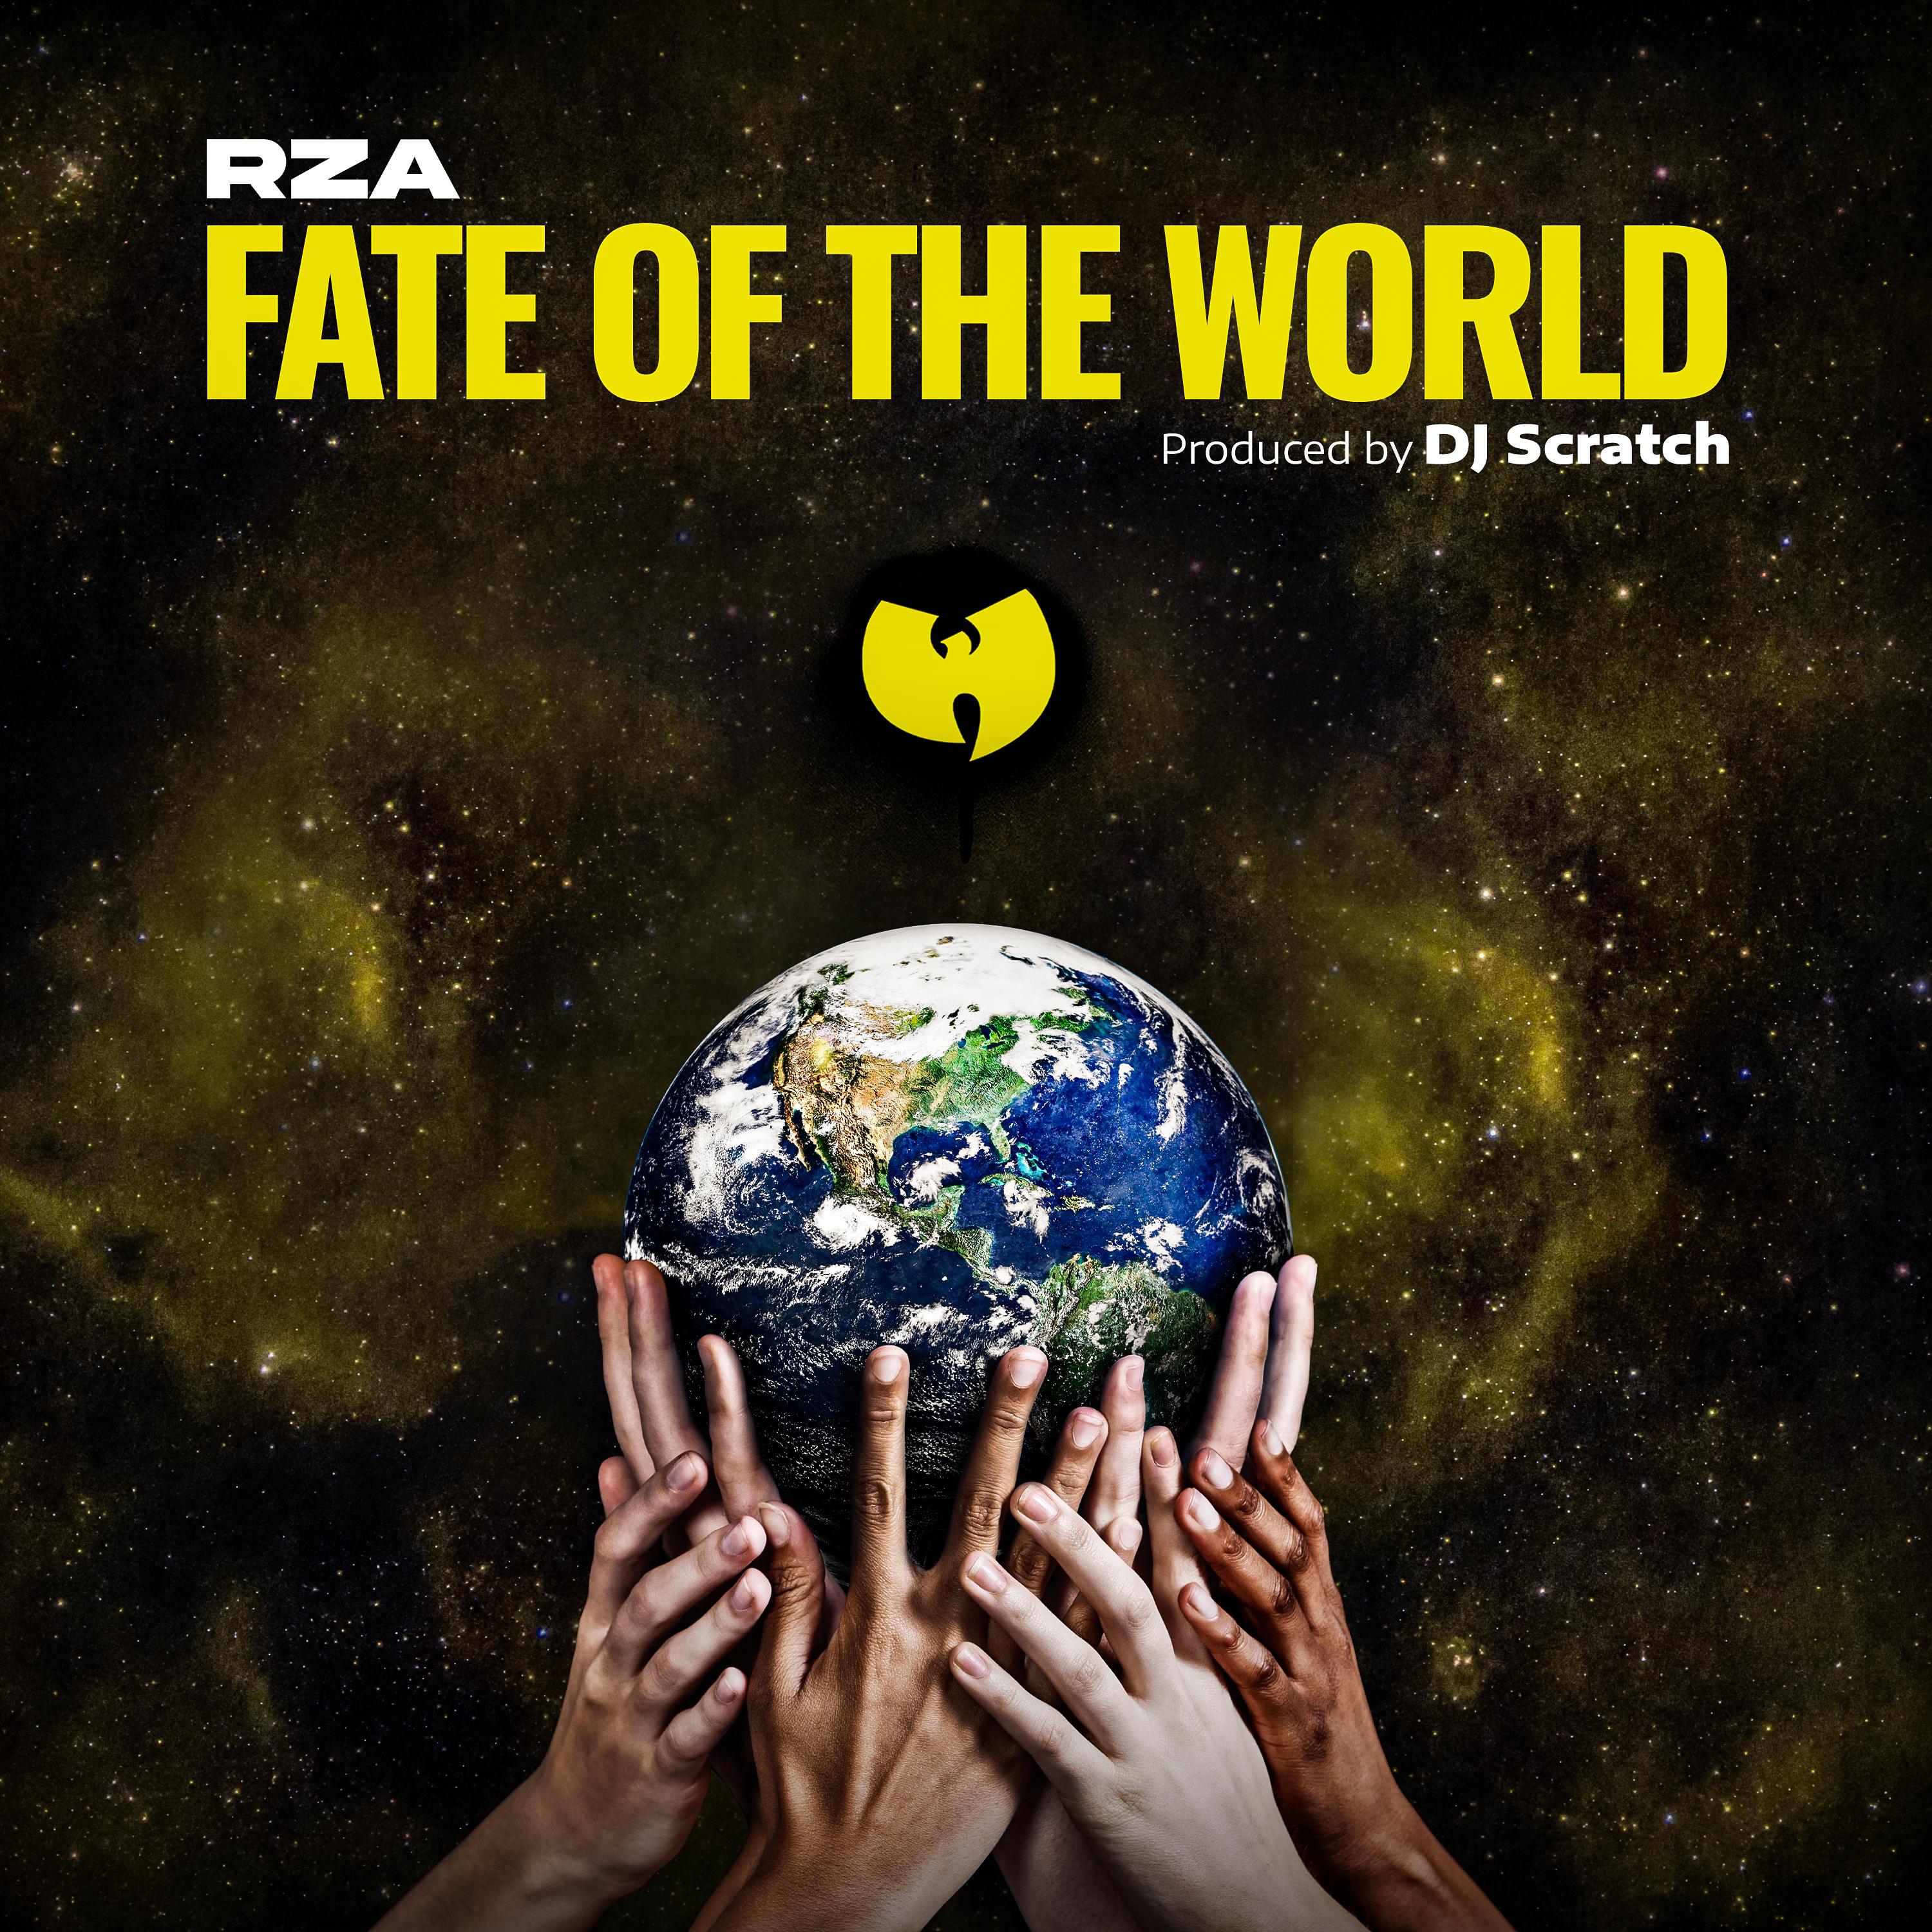 Fate of the World歌词 歌手RZA / DJ Scratch-专辑Fate of the World-单曲《Fate of the World》LRC歌词下载